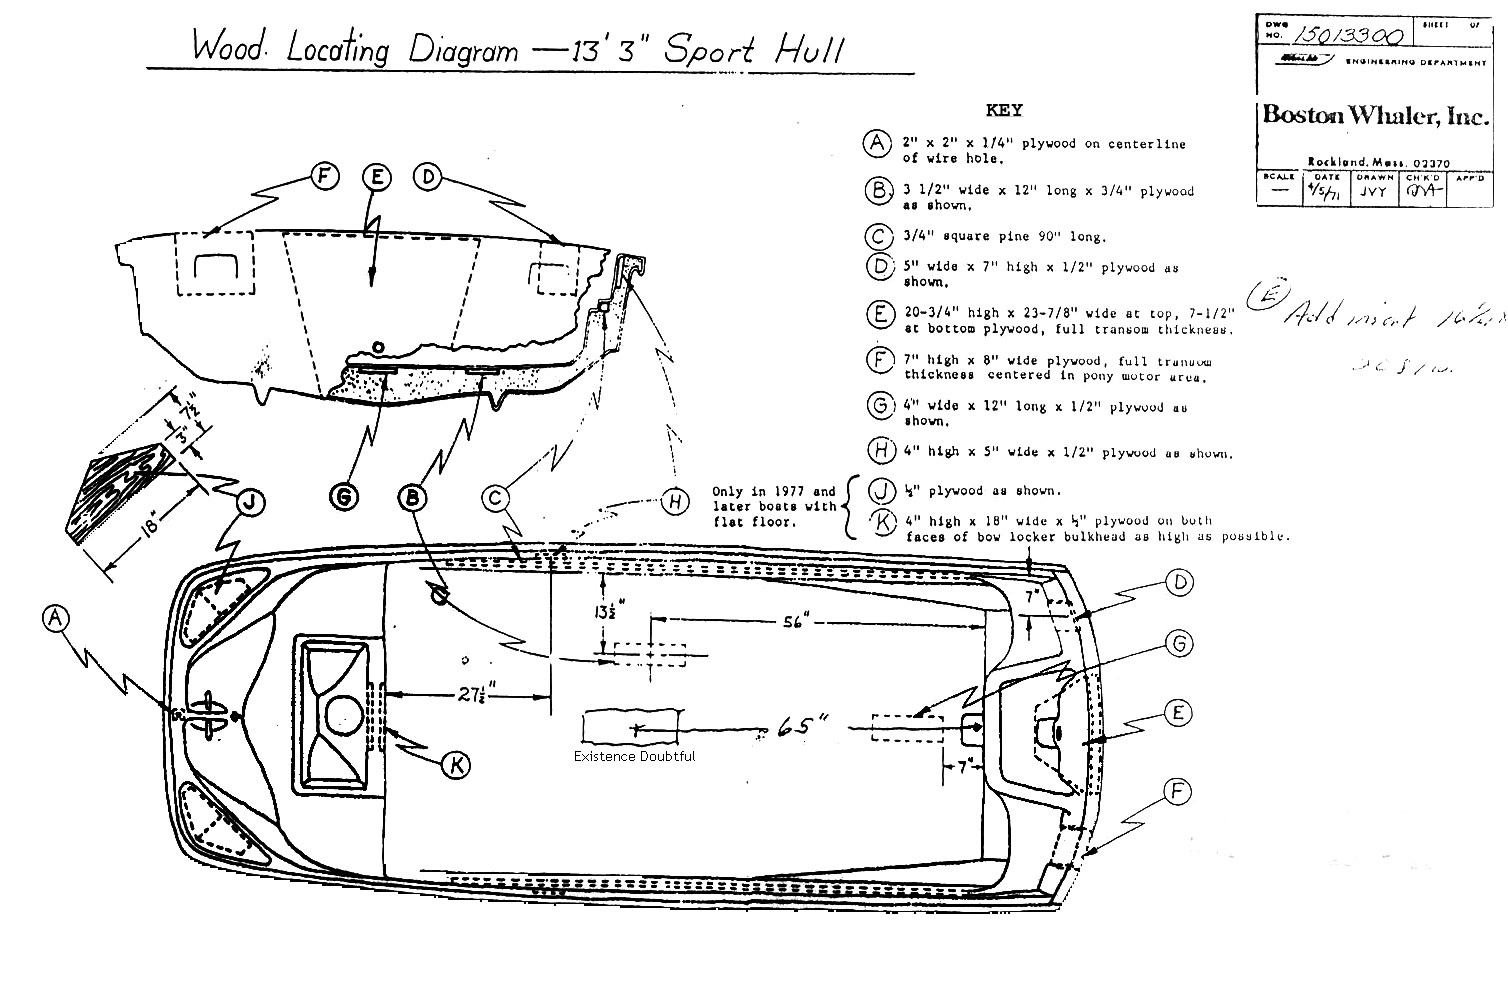 Boston Whaler Dwg Wood Locating Diagram—13 3" Sport Hull dated 4 5 71